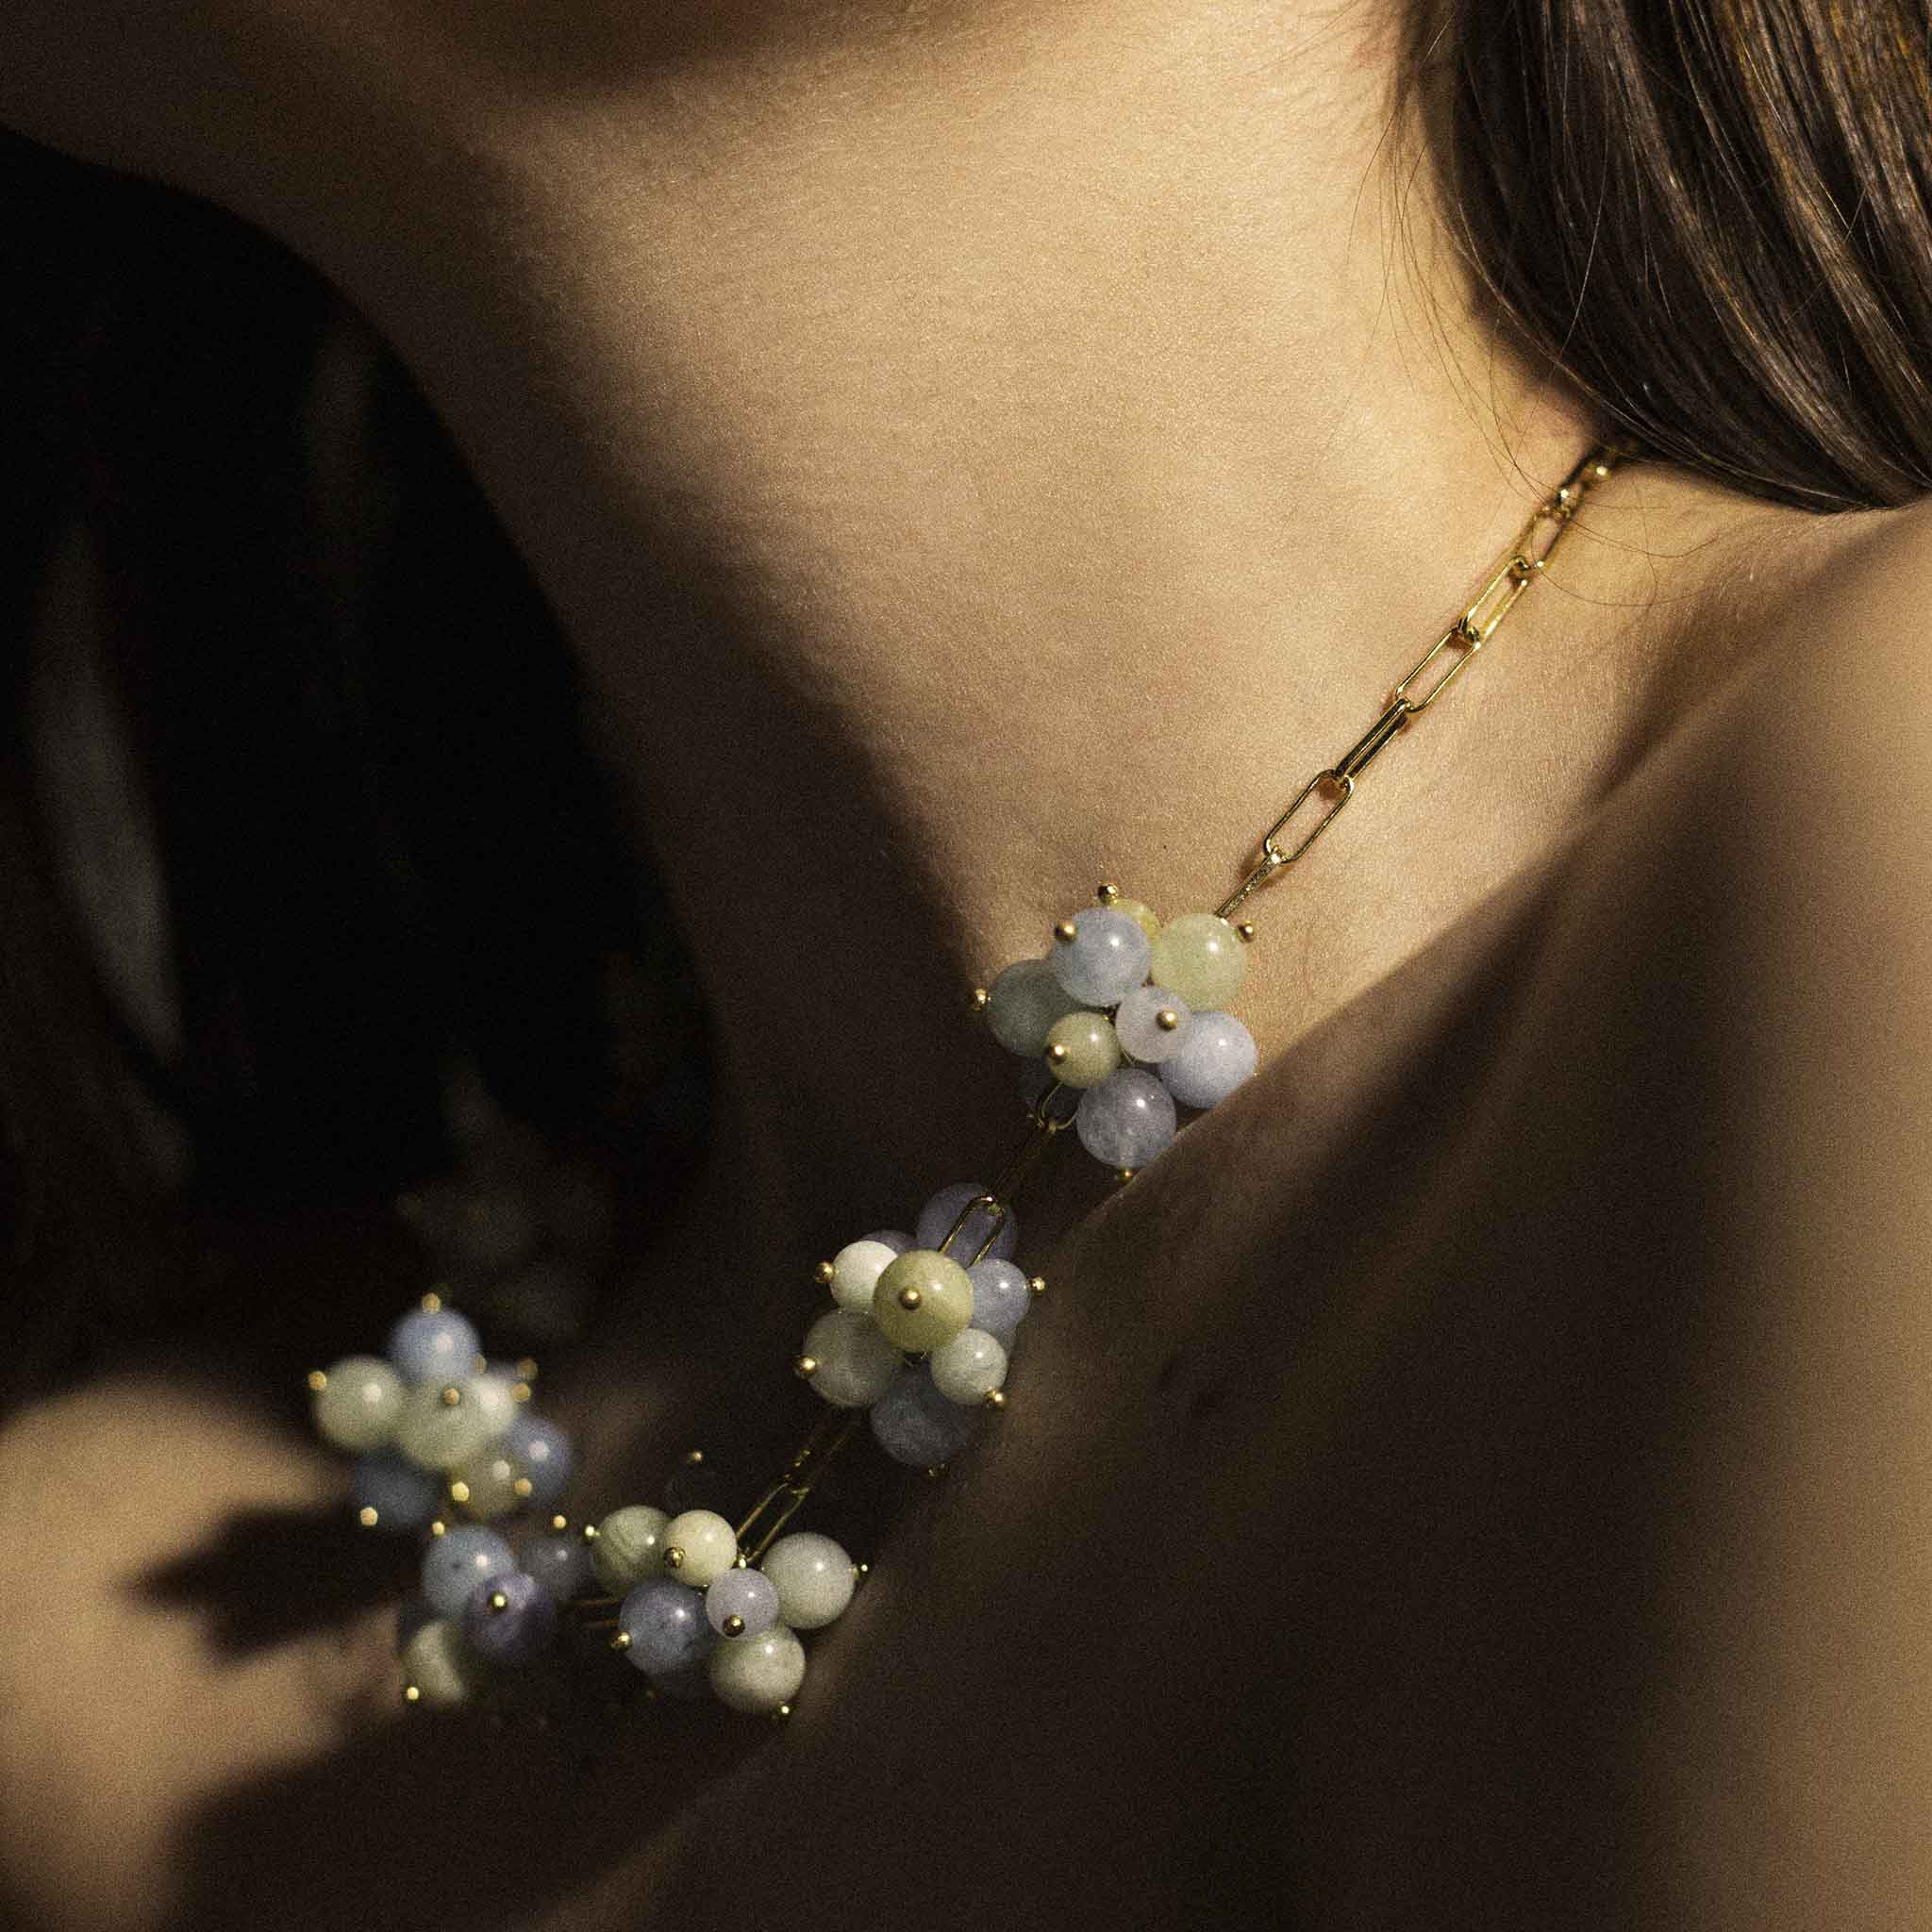 Necklace with aquamarine